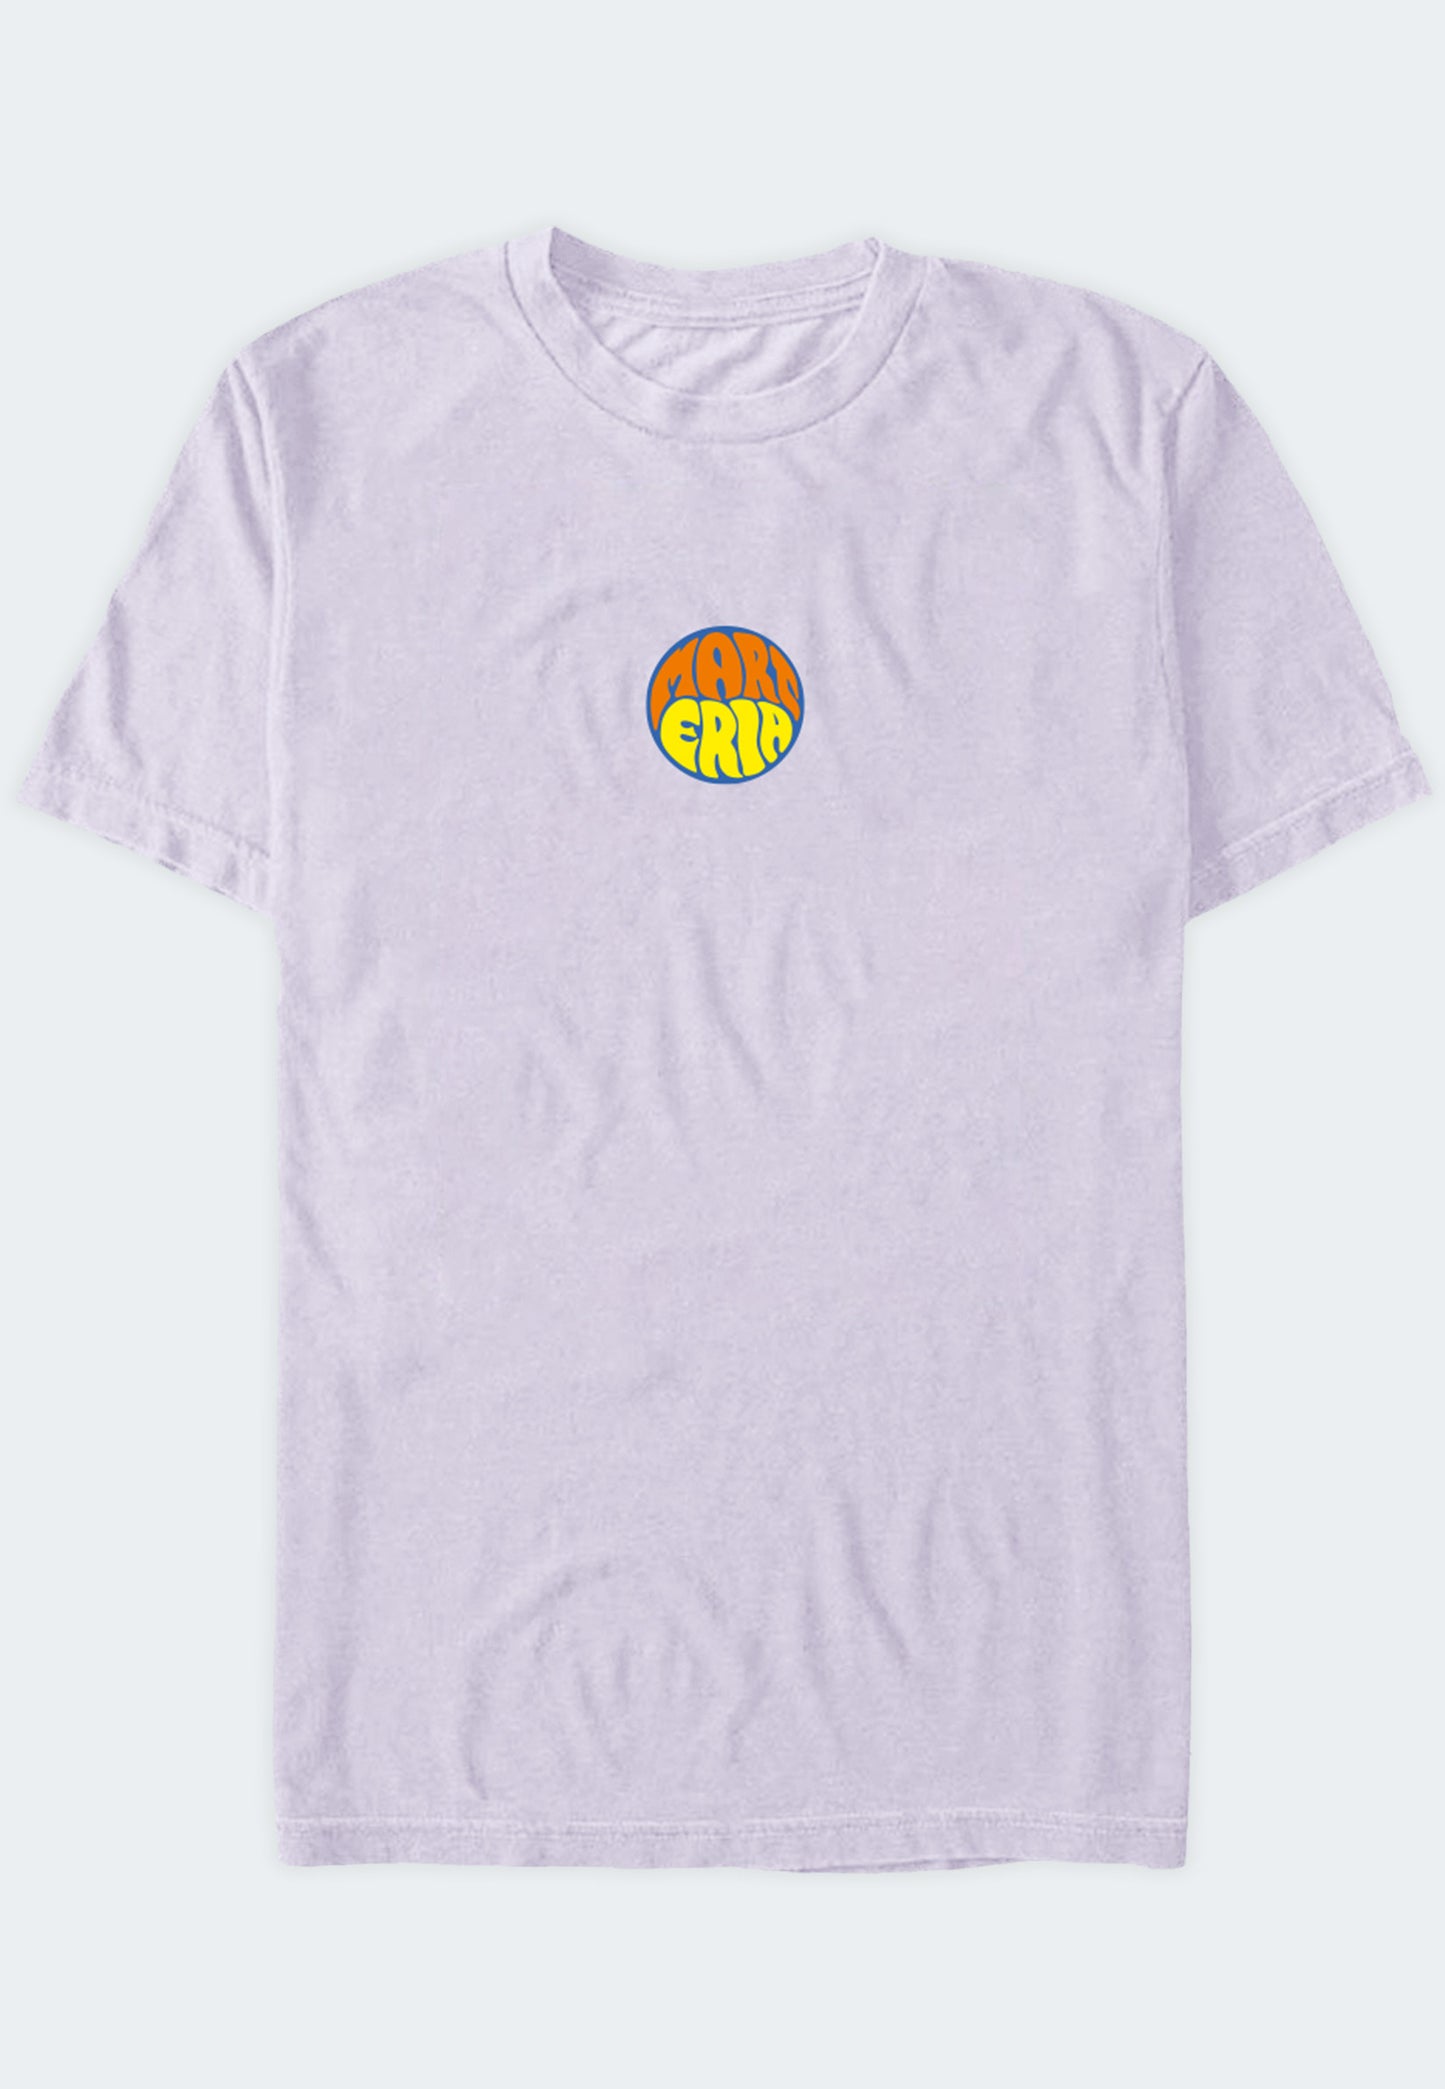 Marteria - Summer 23 Lilac - T-Shirt